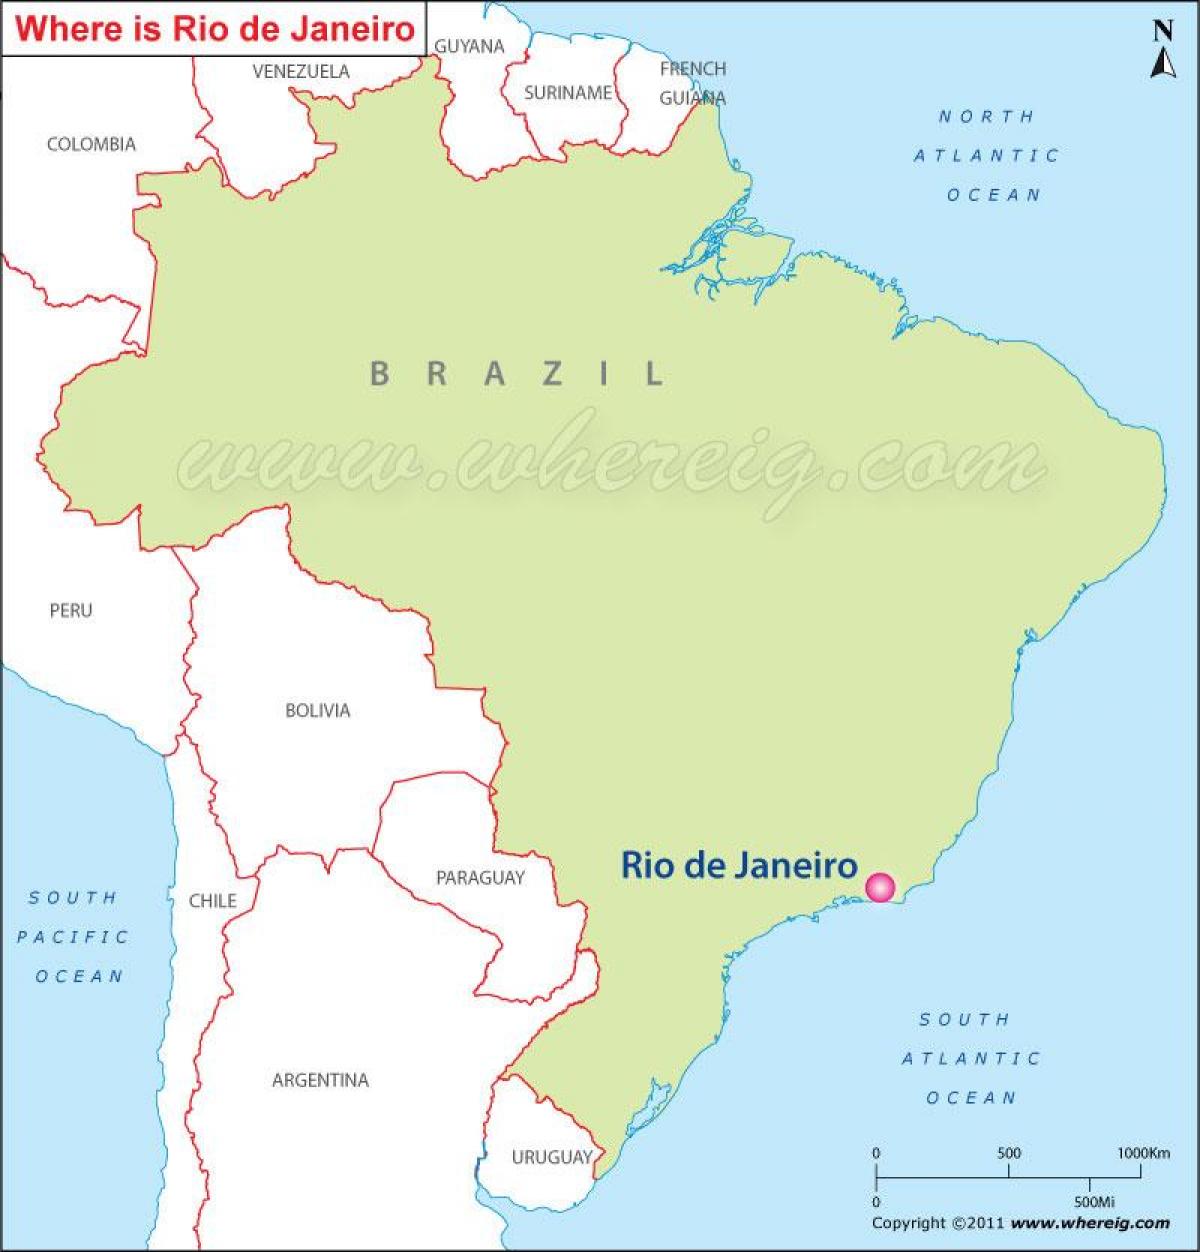 Mapa Rio de Janeiro, Brazília